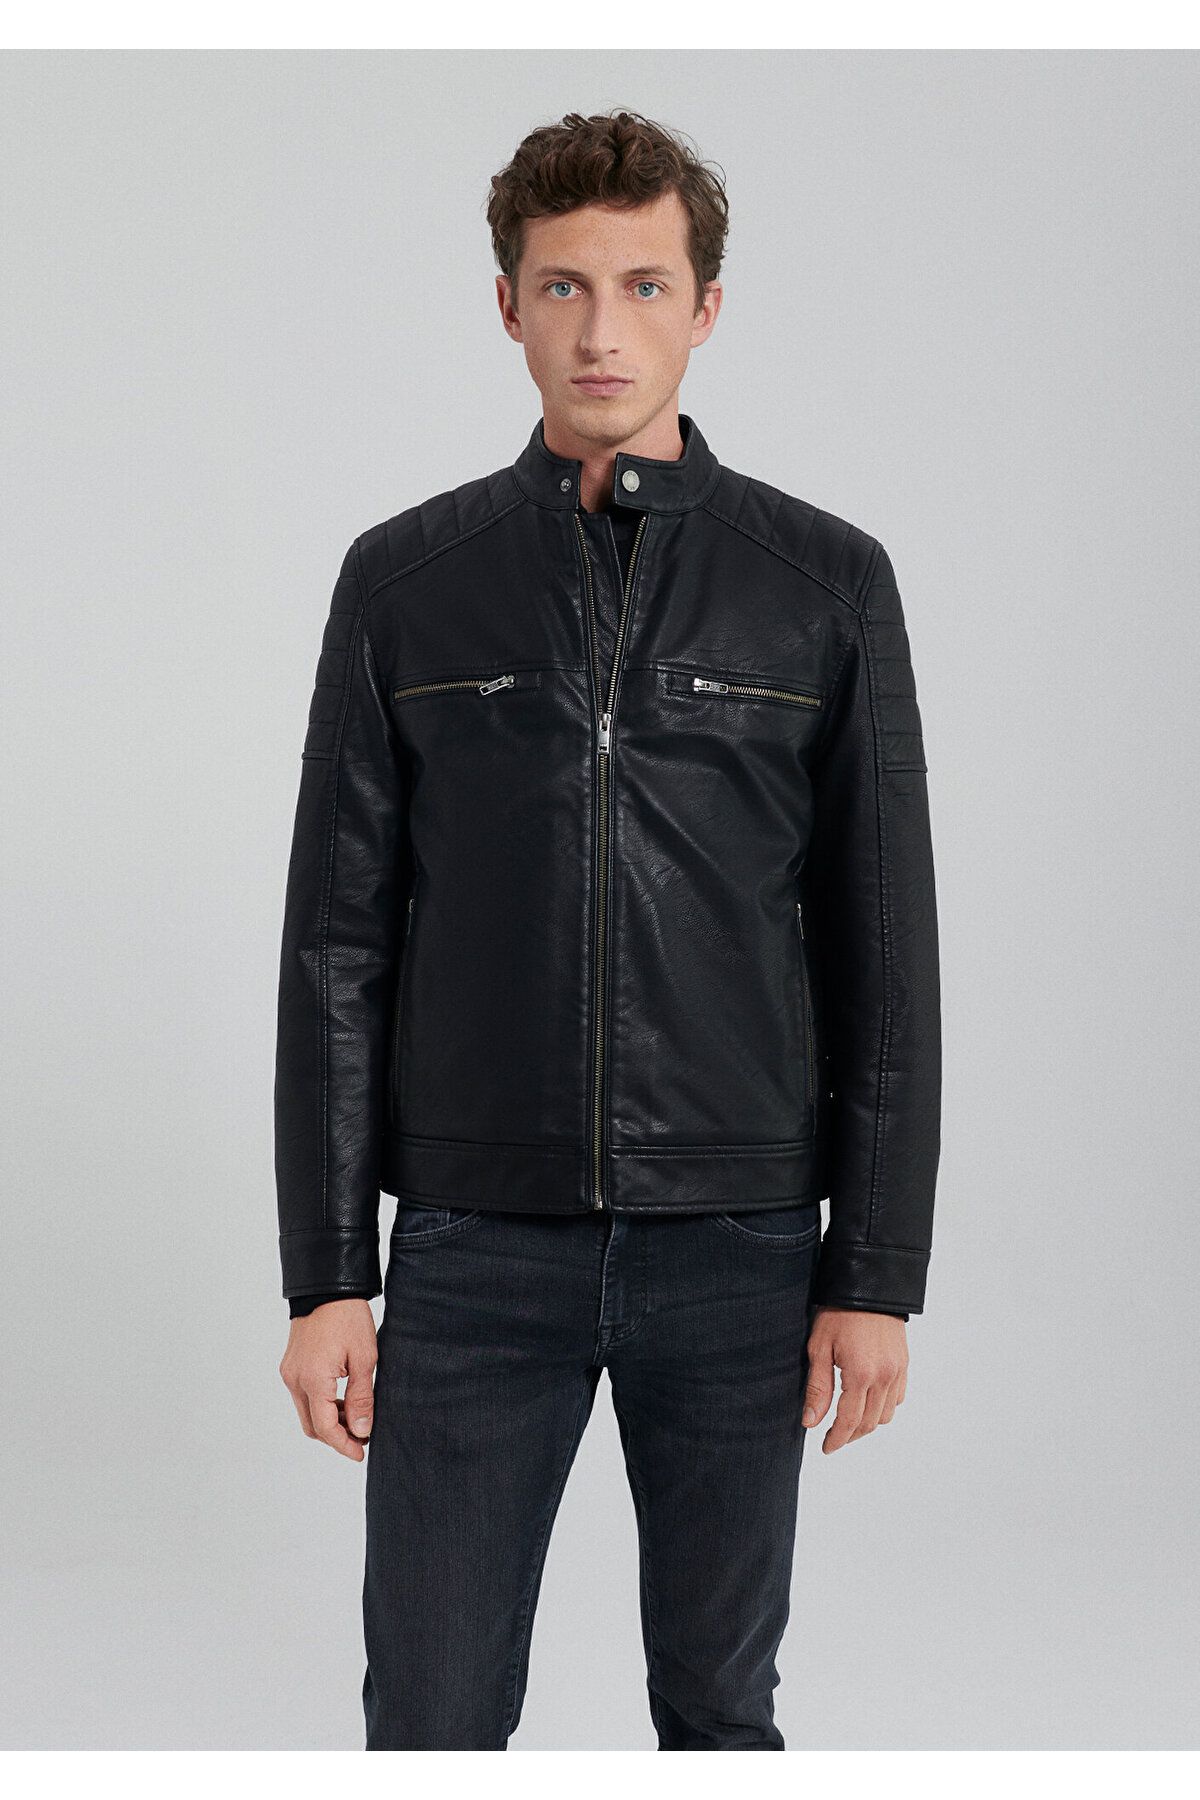 Mavi ژاکت چرمی مصنوعی سیاه و سفید باریک / برش 0110345-900